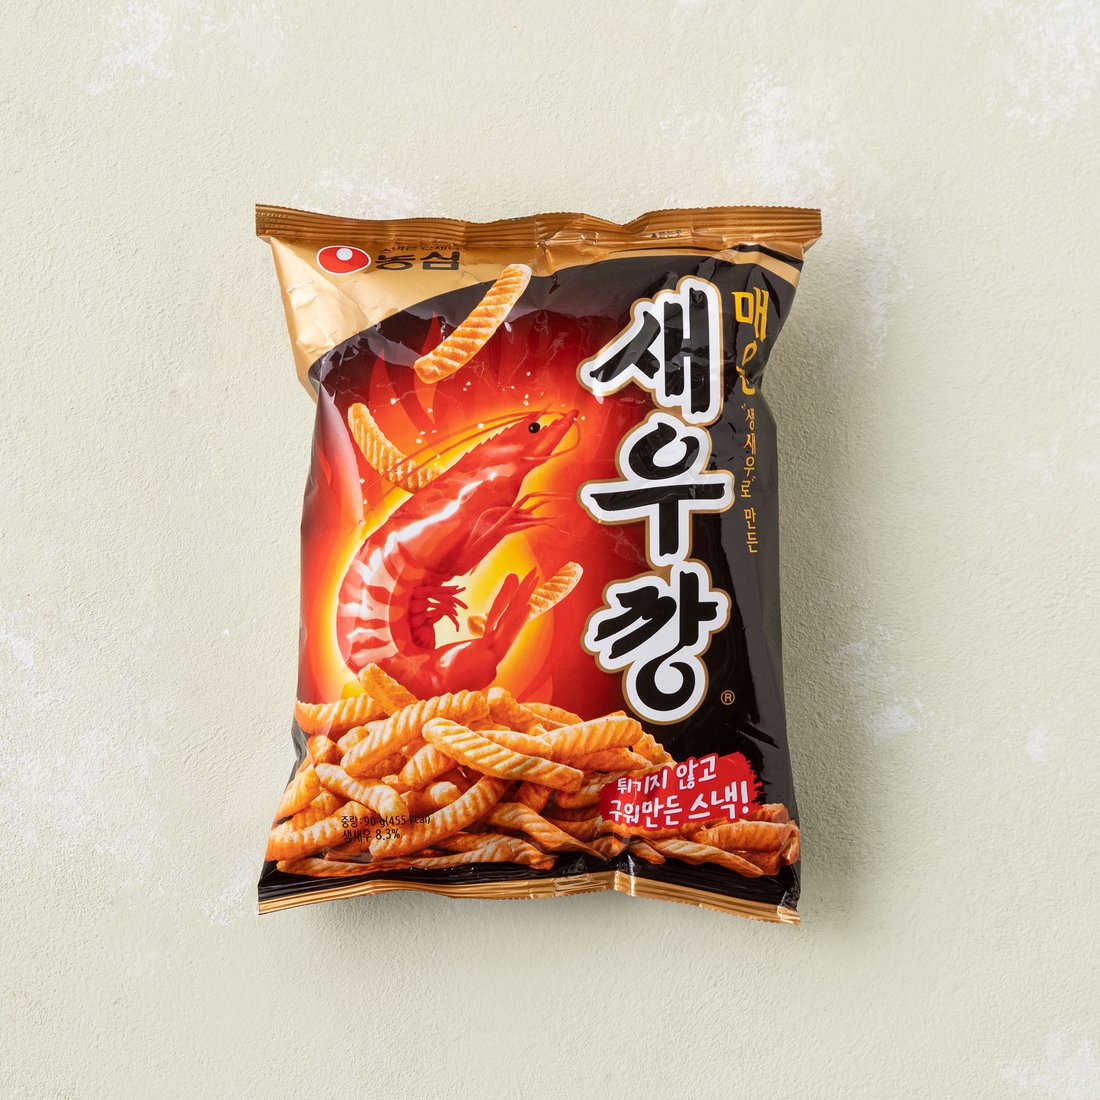 NS Spicy shrimp snack 매운새우깡 90g